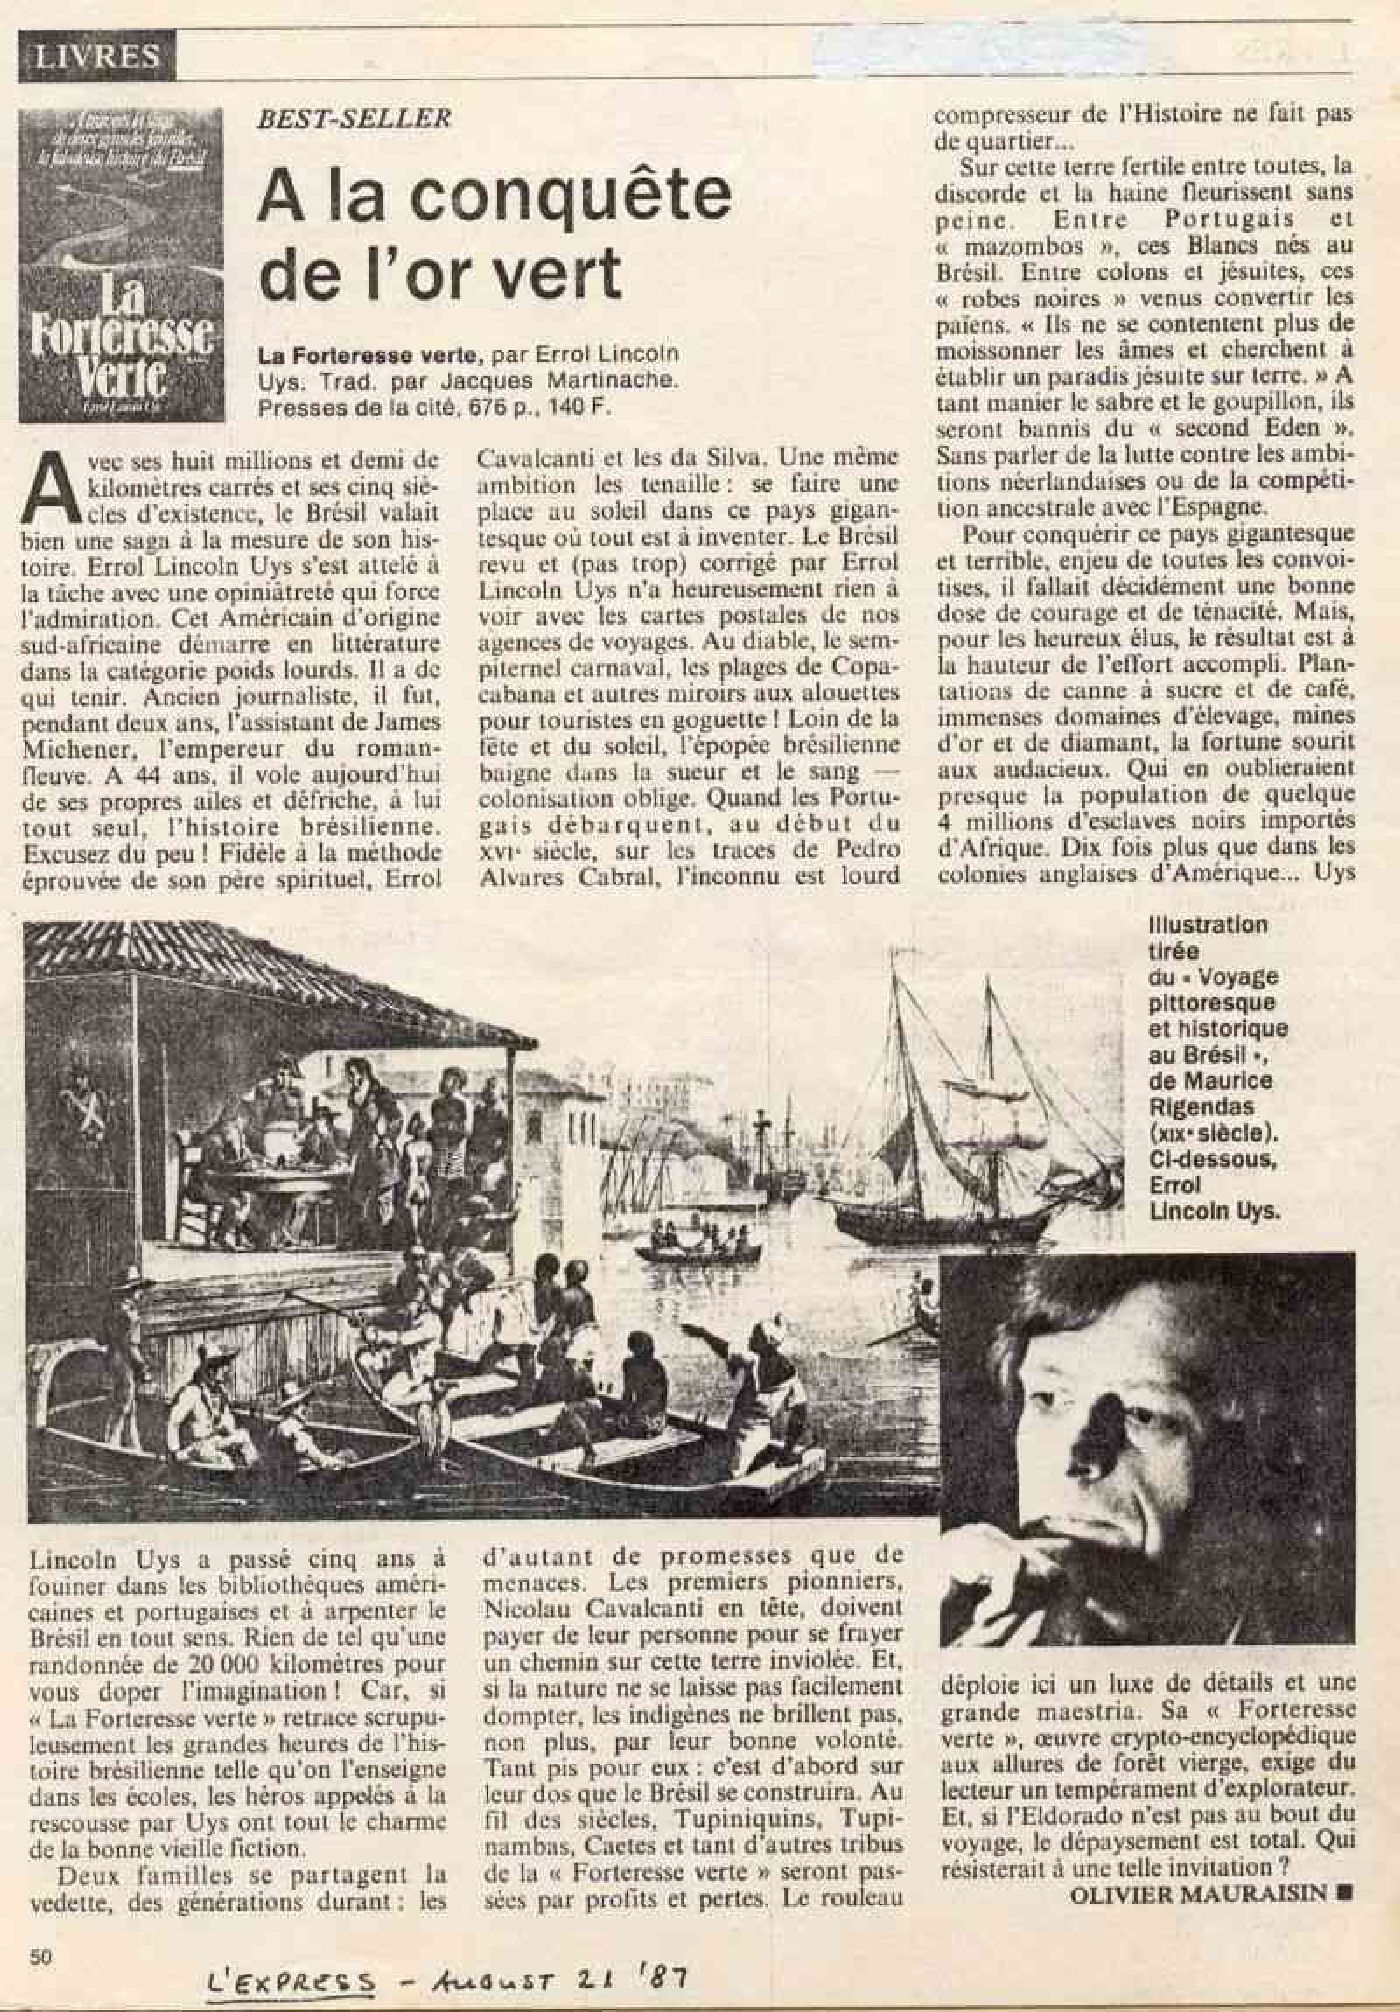 L'Express, Paris - Review of Brazil (La Forteresse Verte) by Errol Lincoln Uys